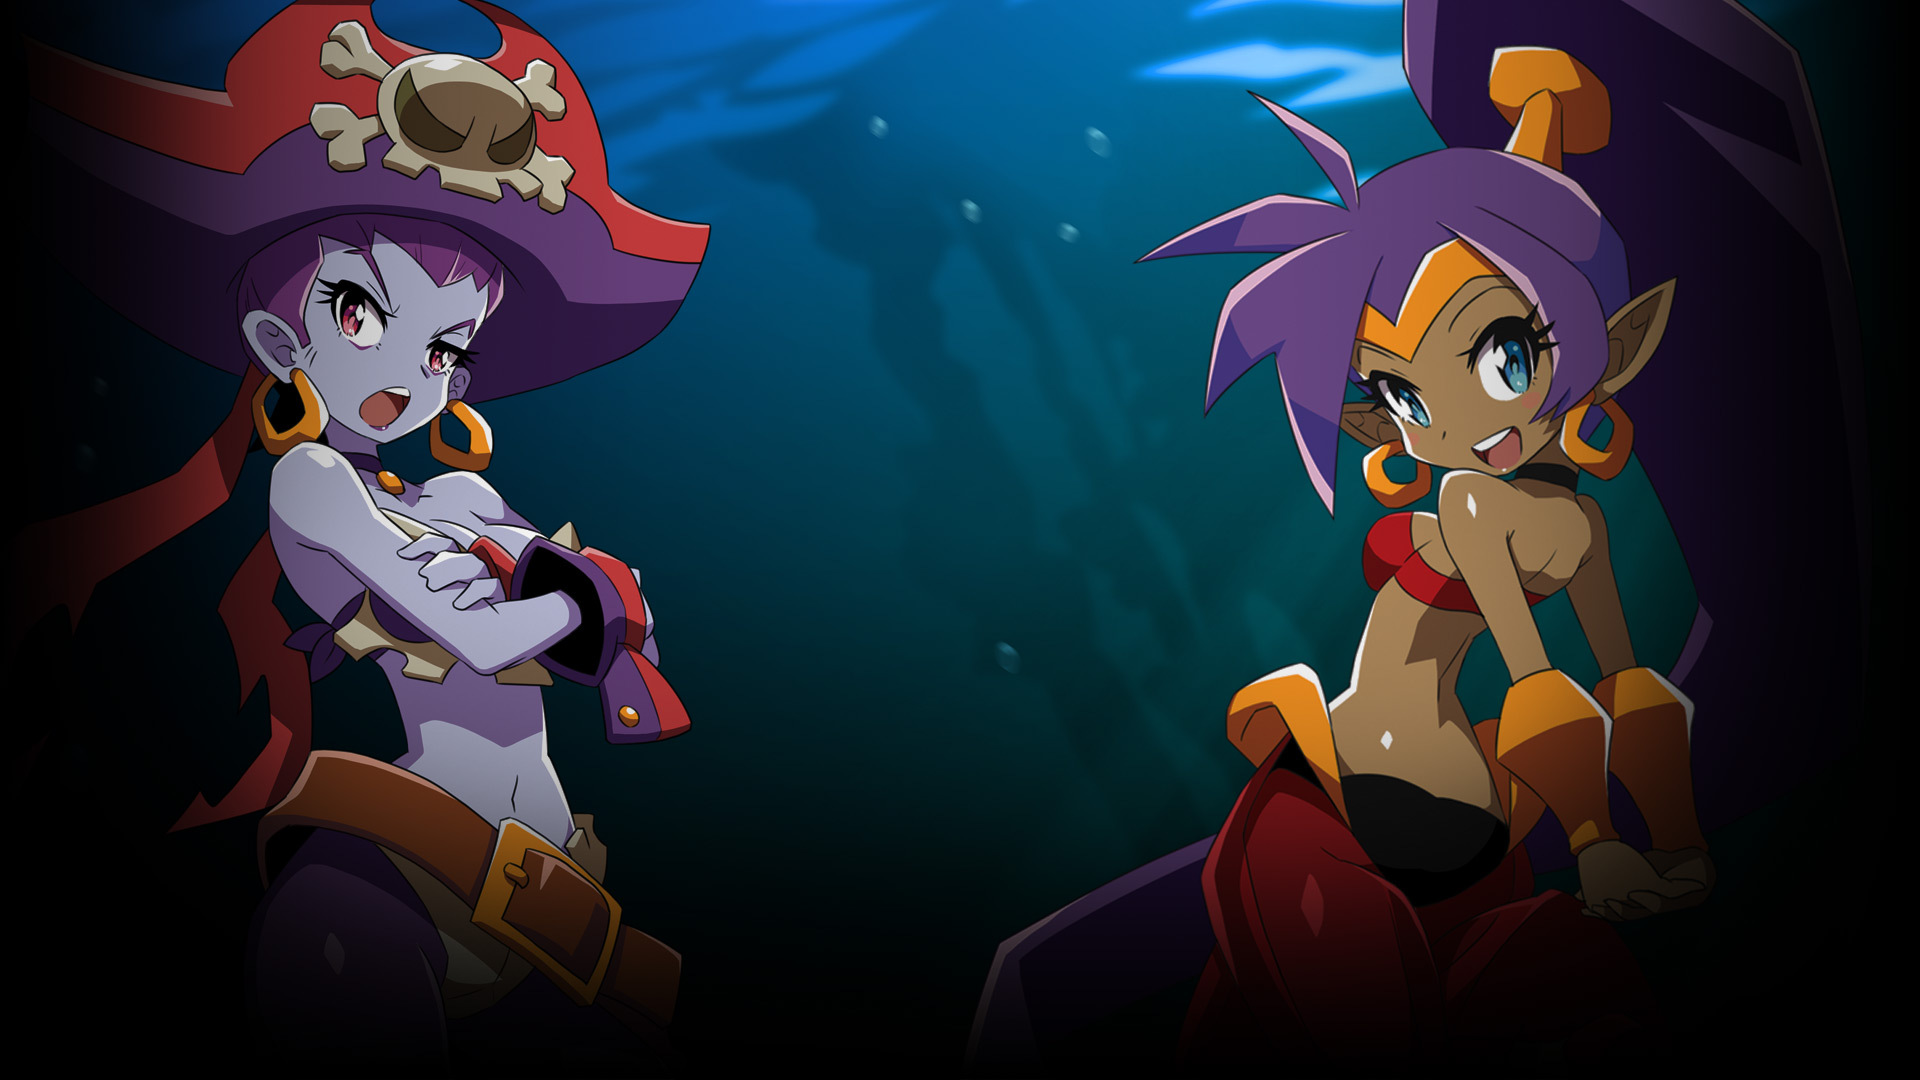 Shantae and Risky